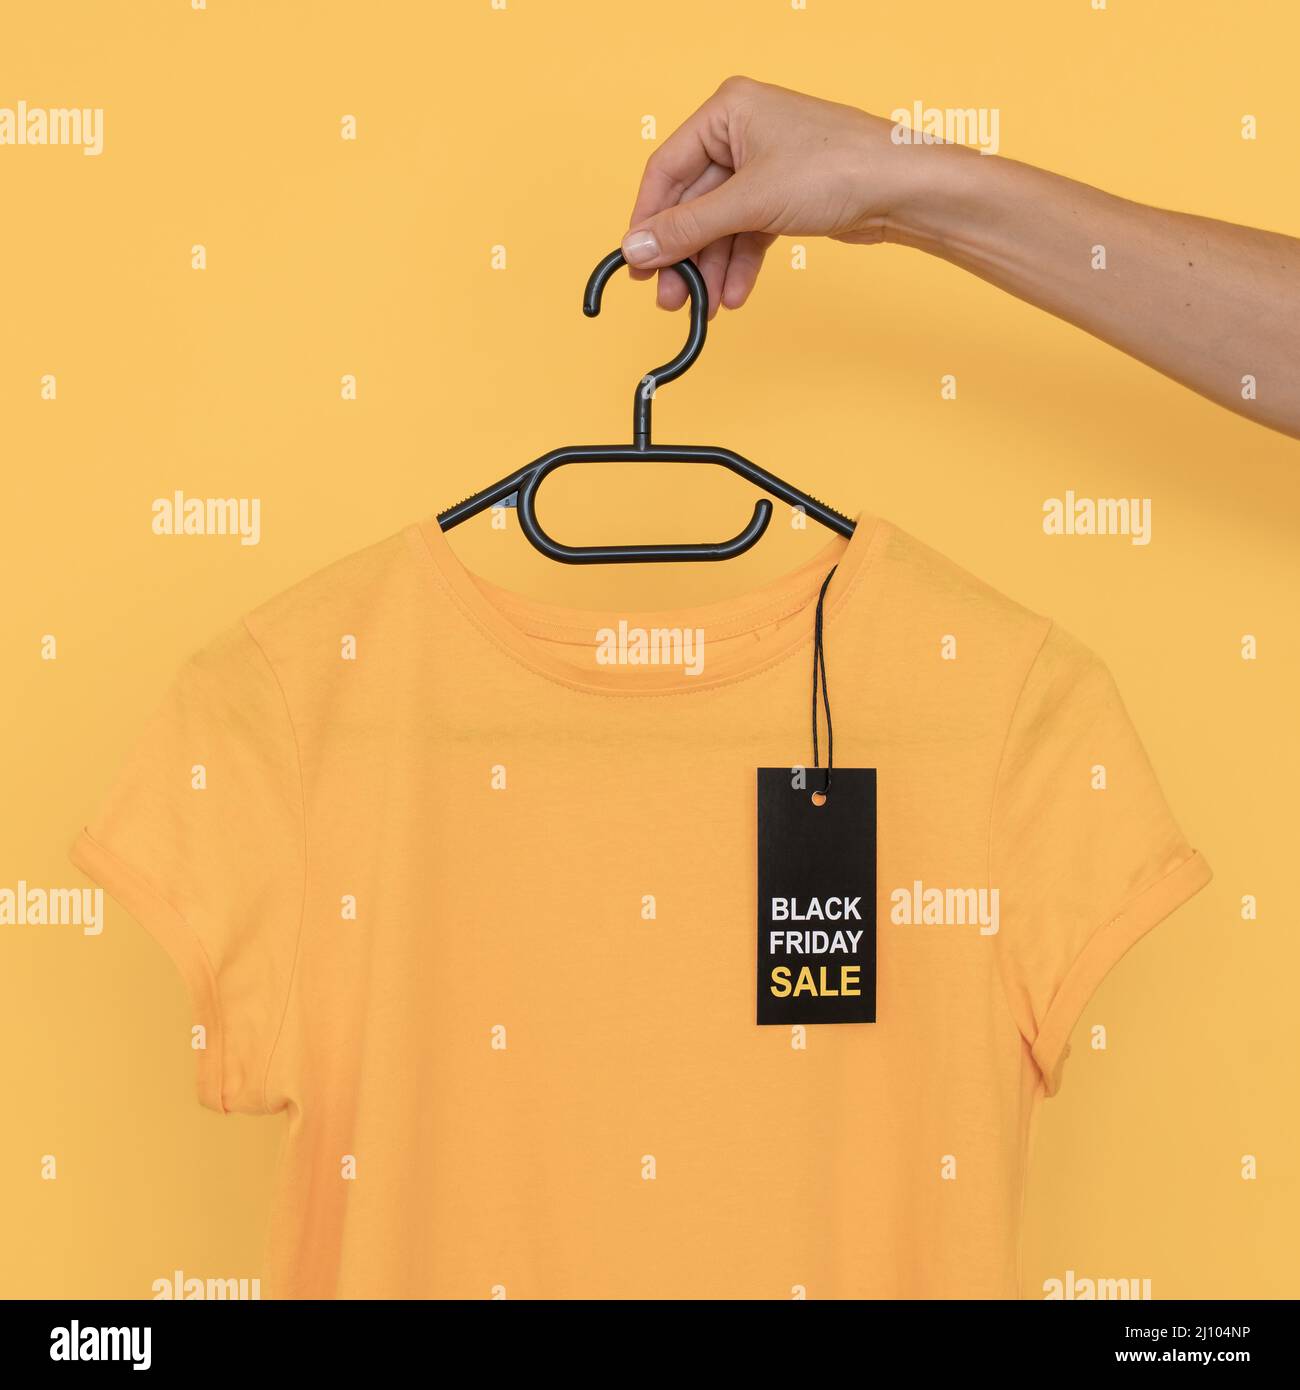 https://c8.alamy.com/comp/2J104NP/black-friday-sale-t-shirt-hanger-2J104NP.jpg